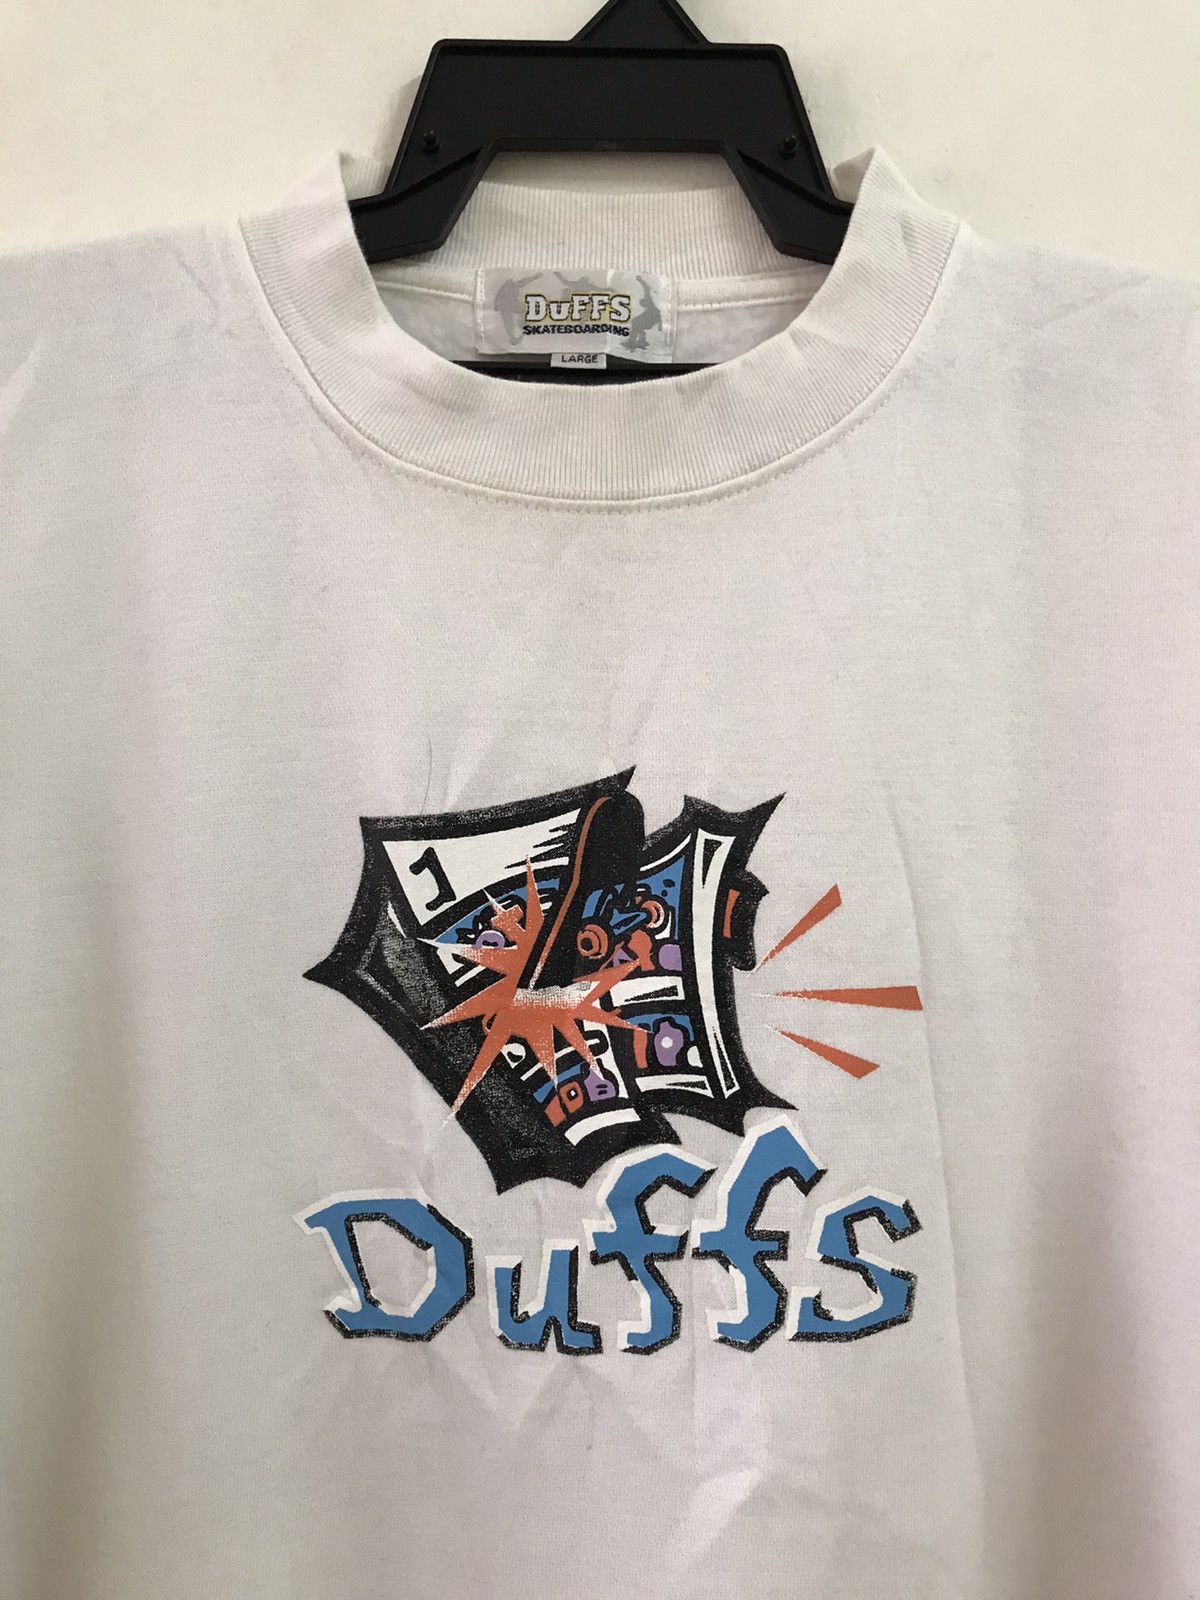 Vintage Vintage Duffs Skateboard Sweatshirt Large Size US L / EU 52-54 / 3 - 2 Preview